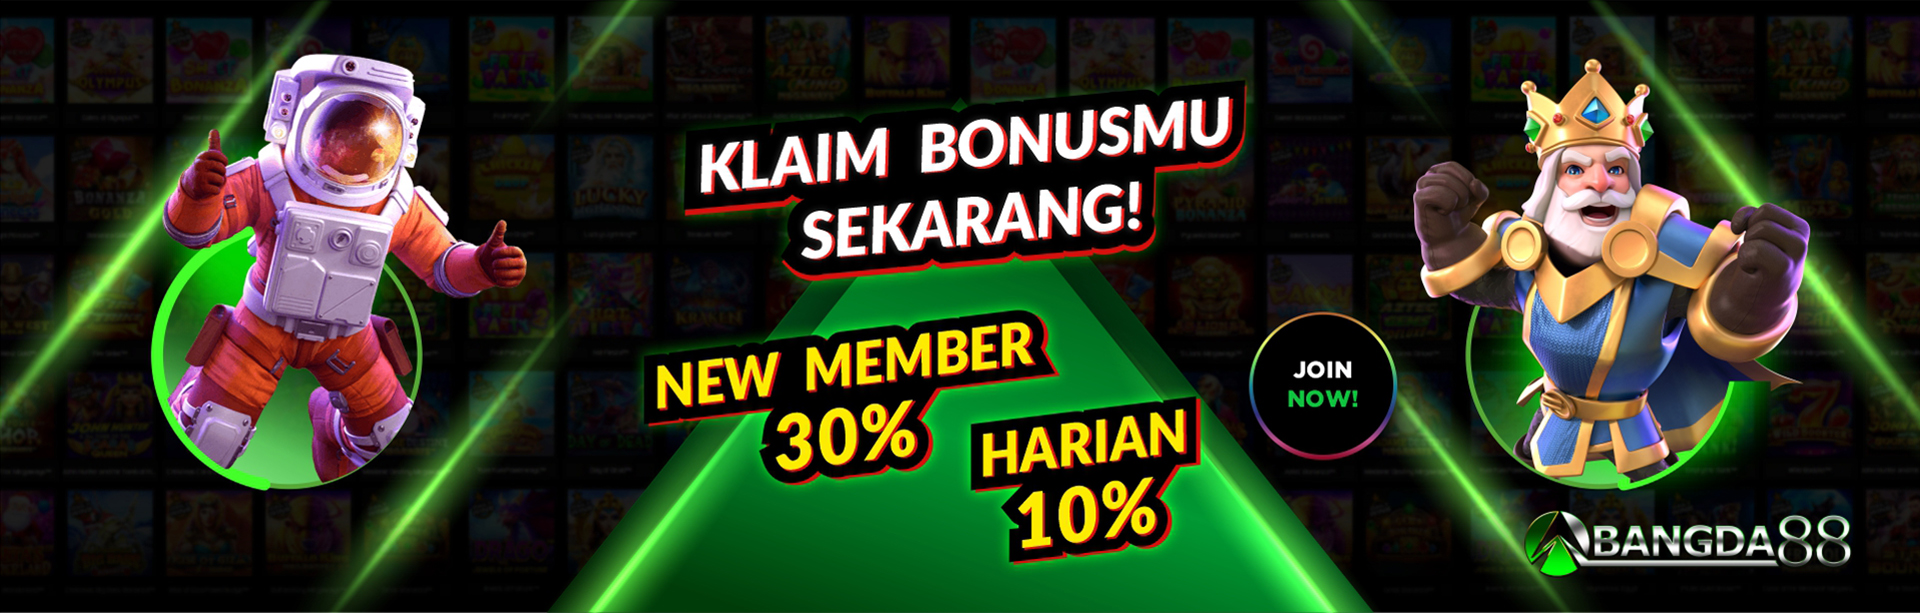 Bonus New Member & Harian